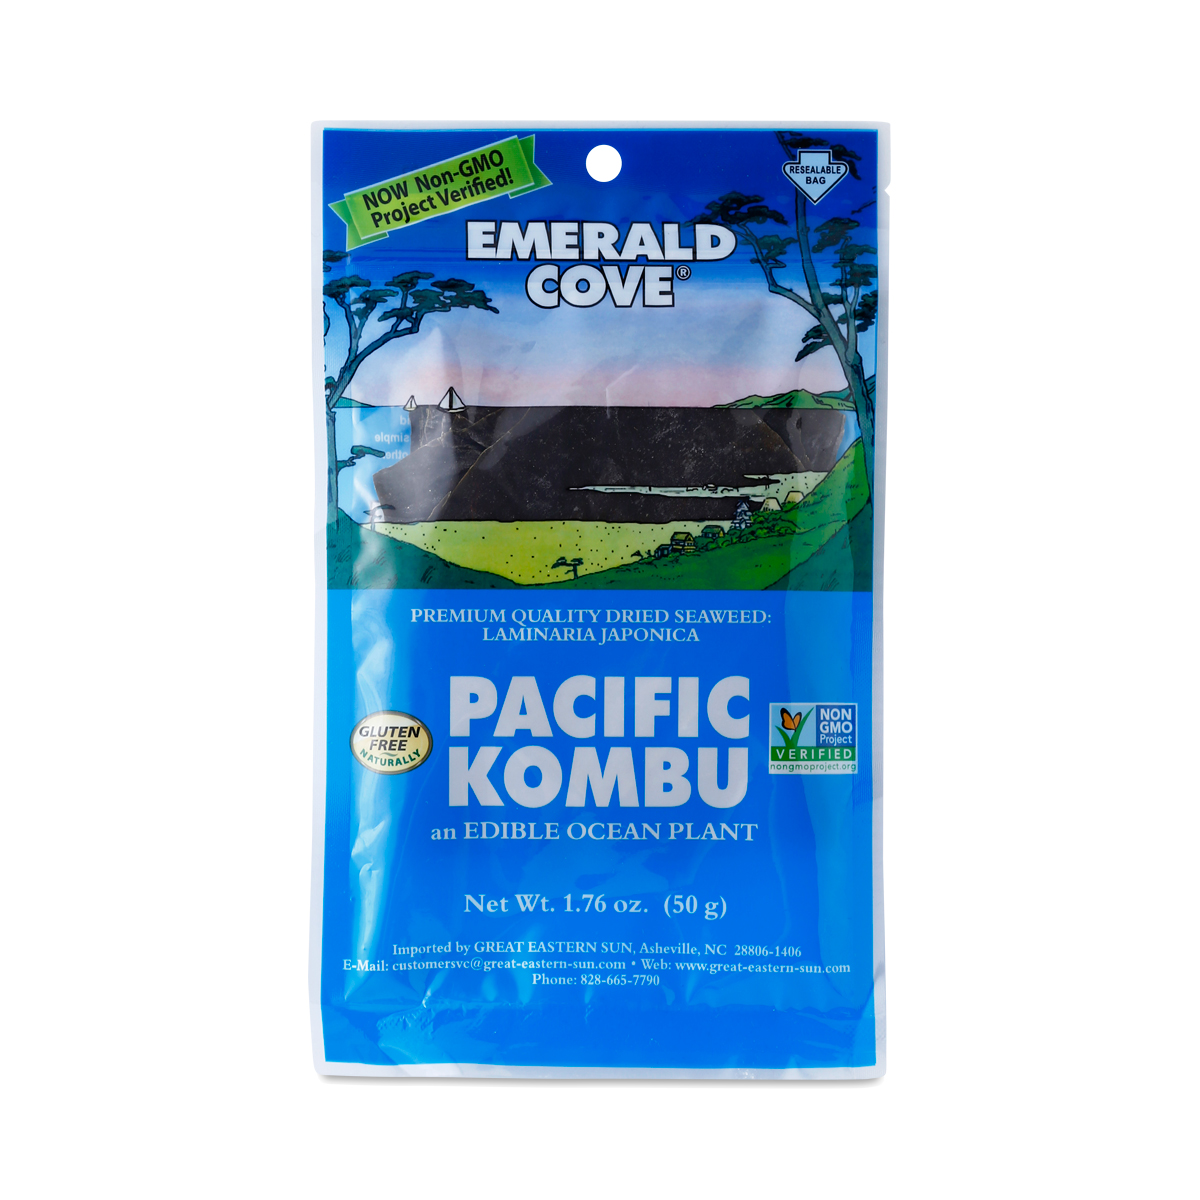 Emerald Cove Pacific Kombu 1.76 oz bag